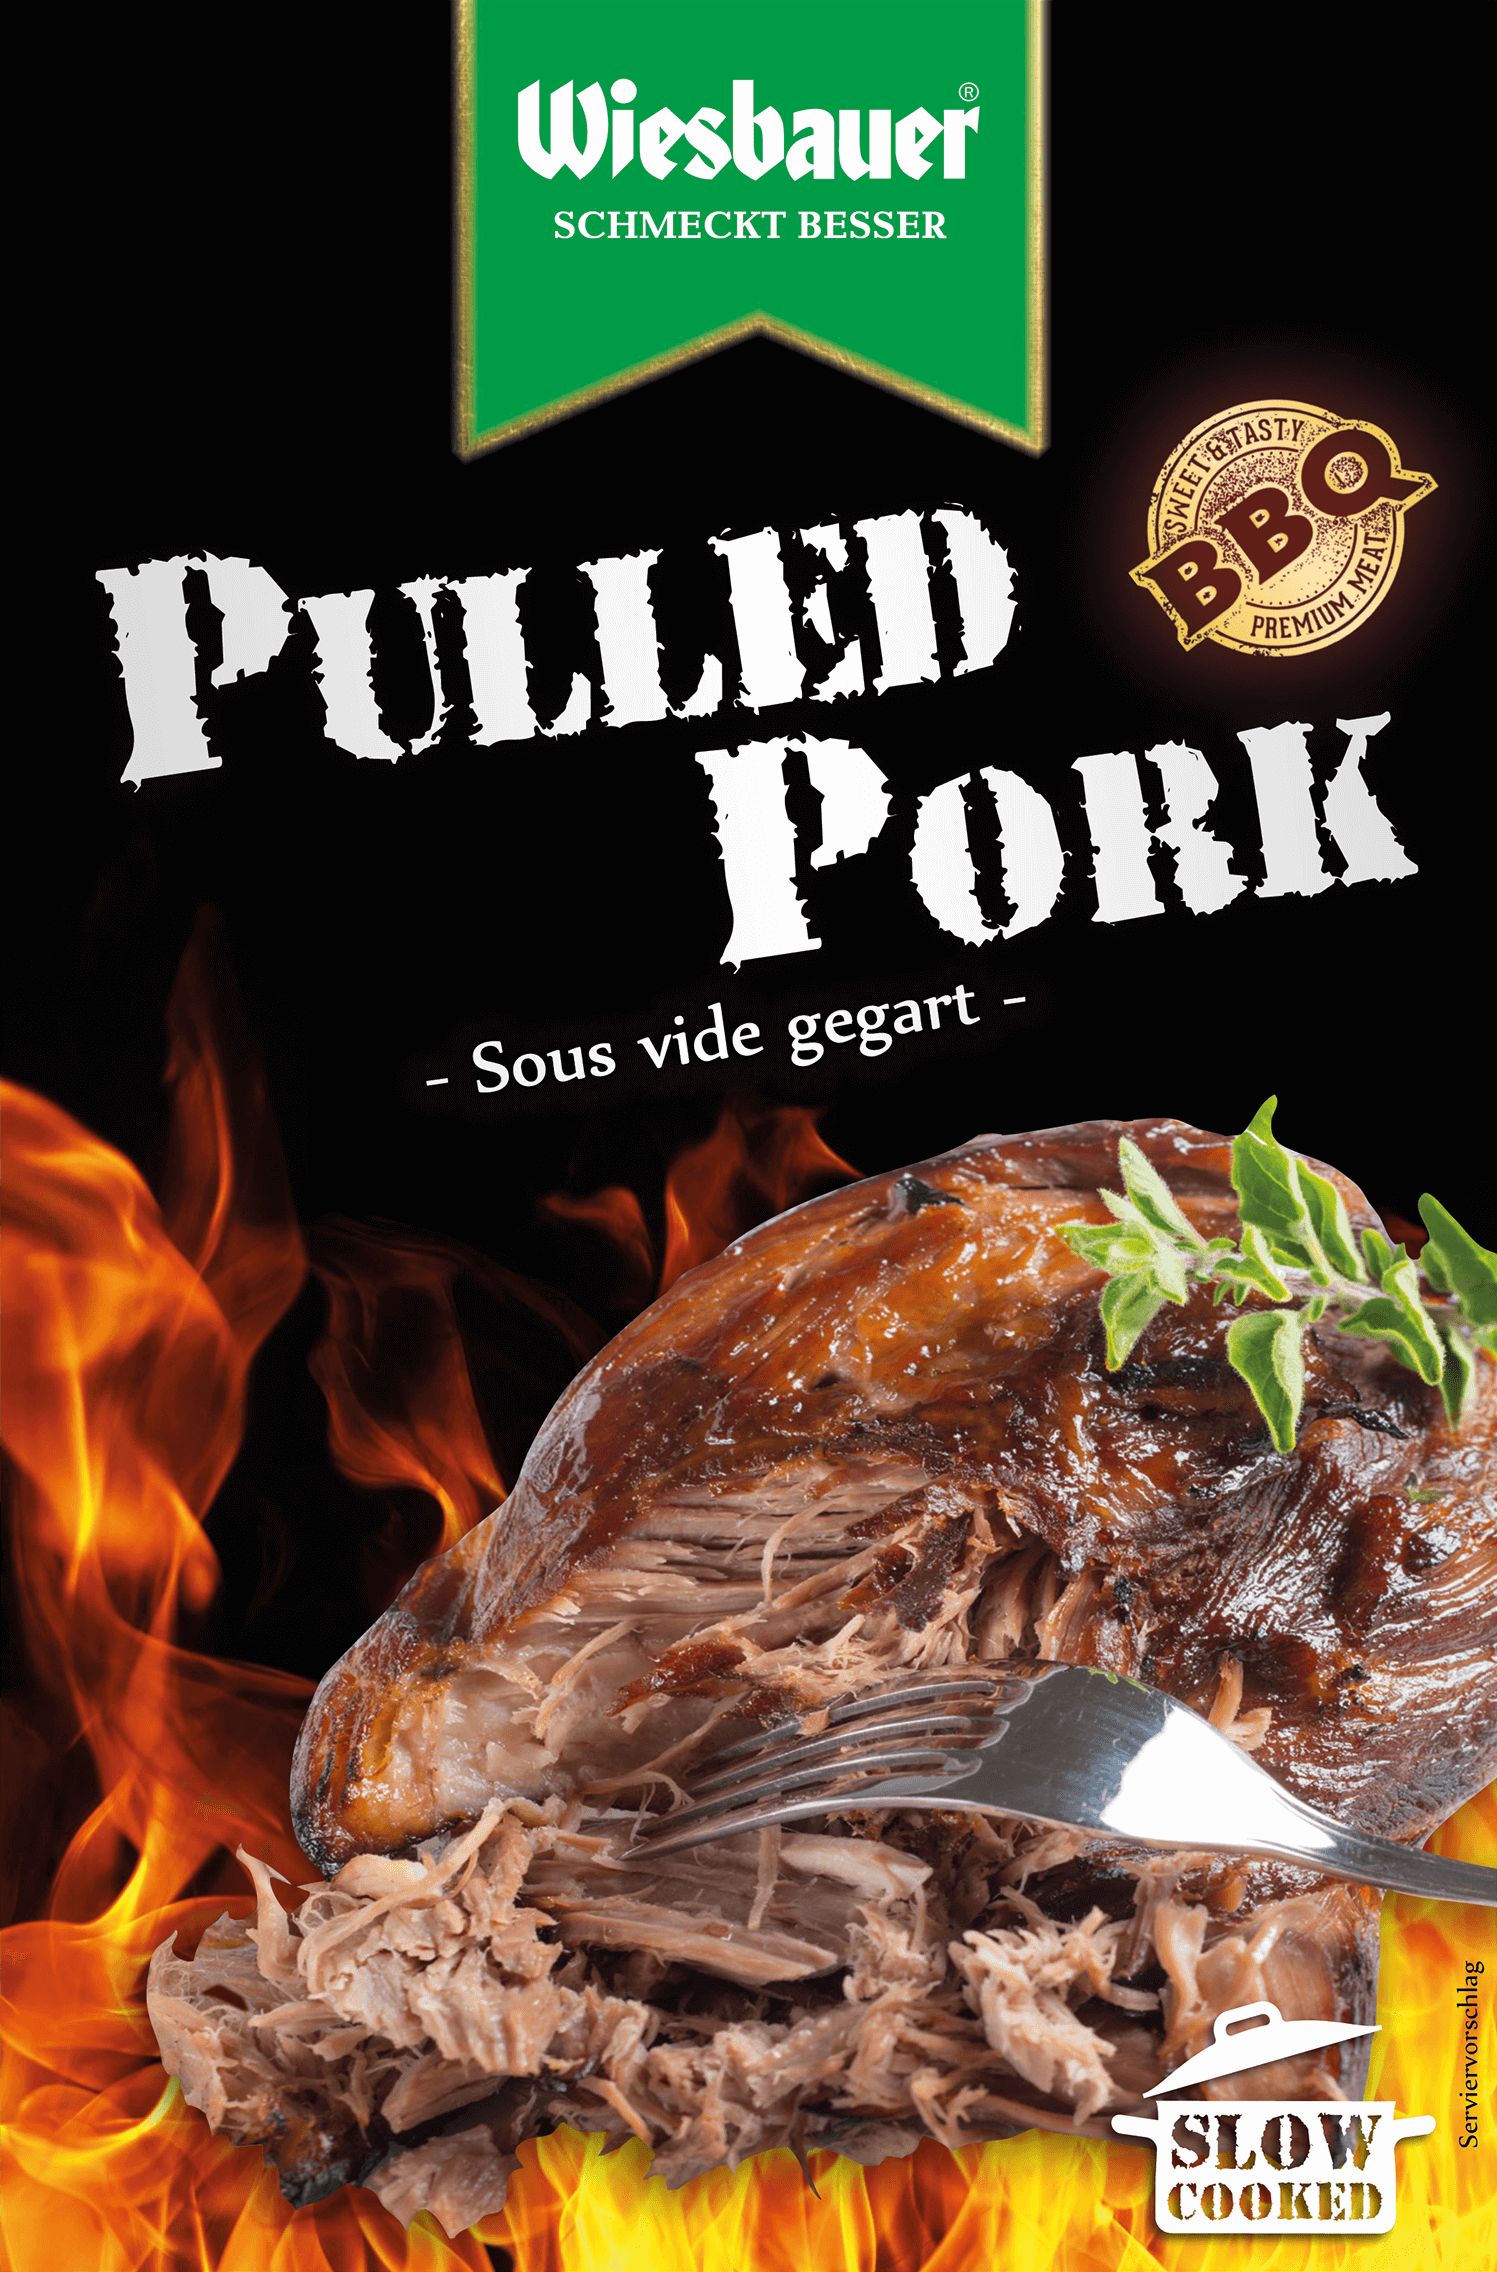 BBQ Pulled Pork